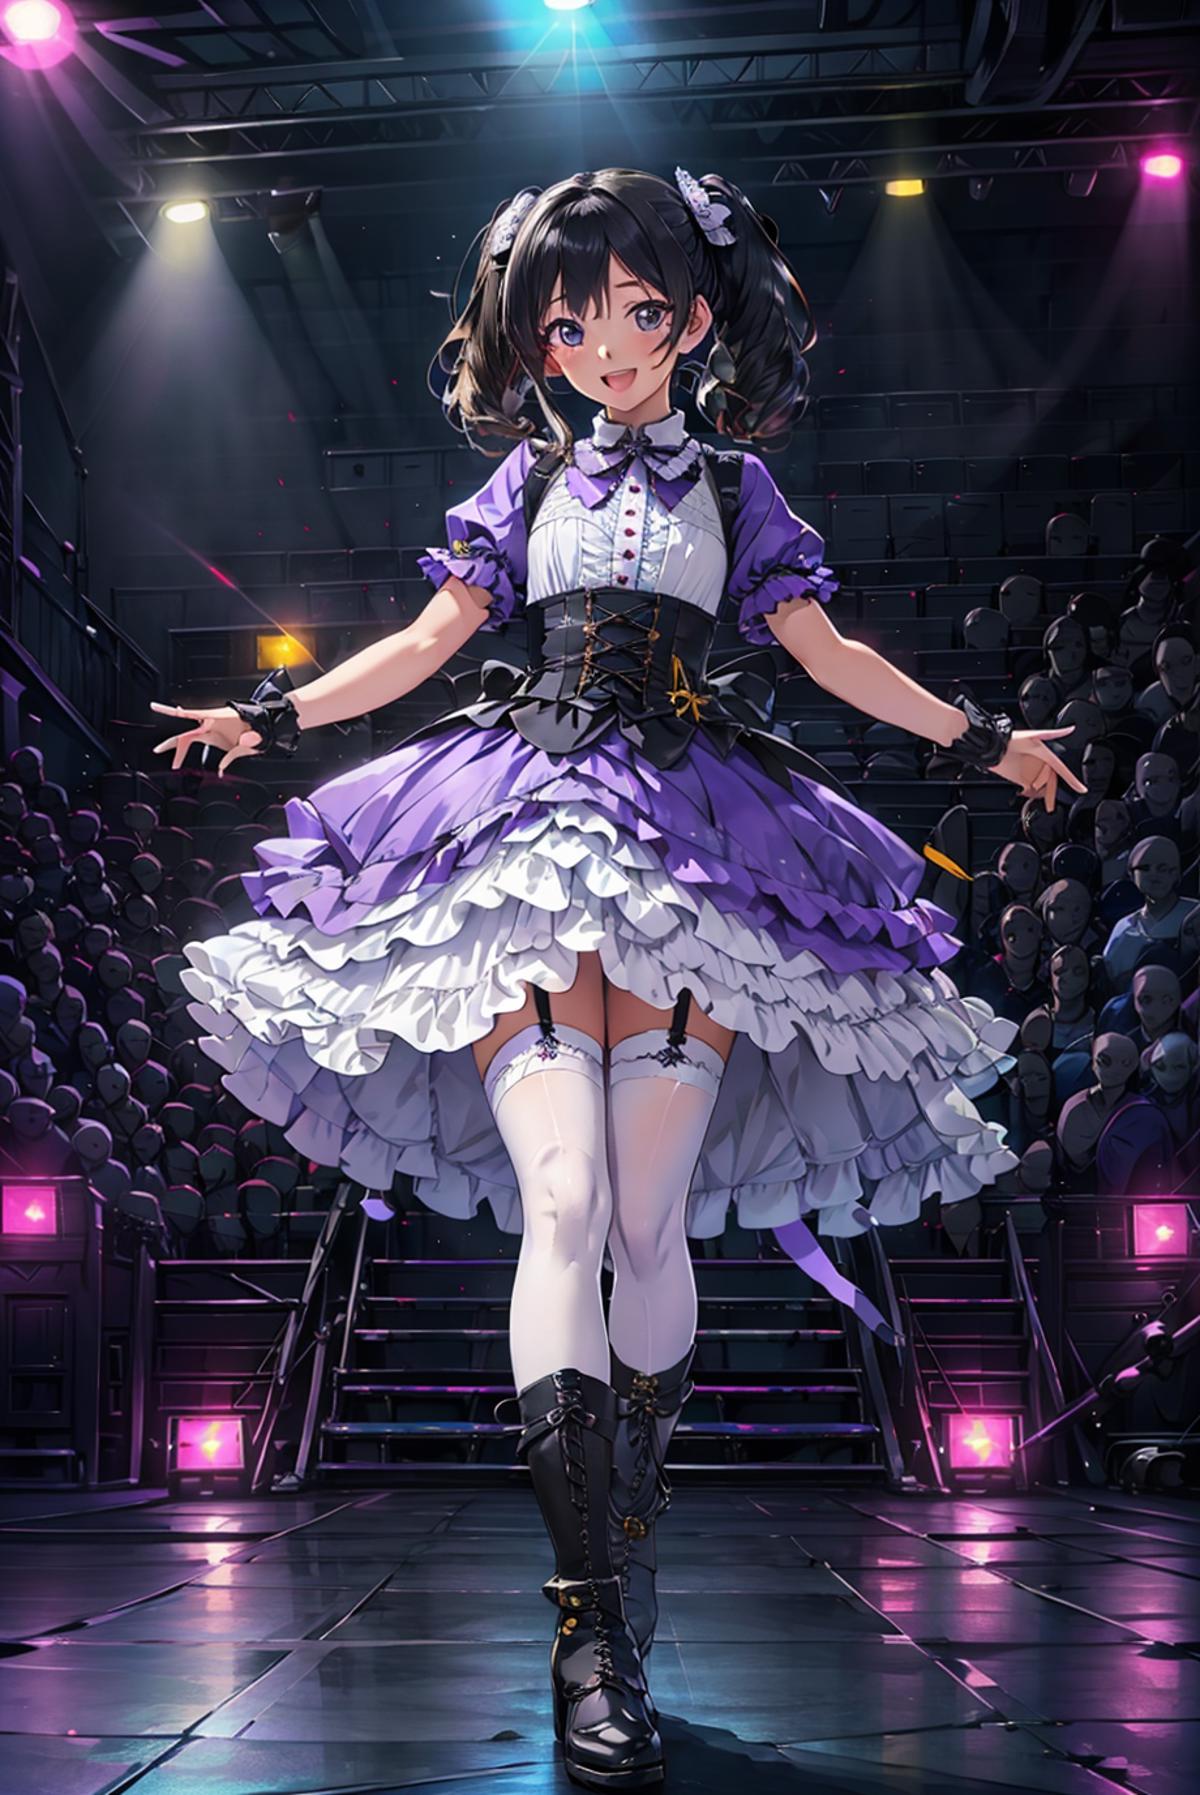 Idol Style Stage Dress Costumes - アイドル風のステージ衣装 ドレスコスチューム  Lora image by cyberAngel_